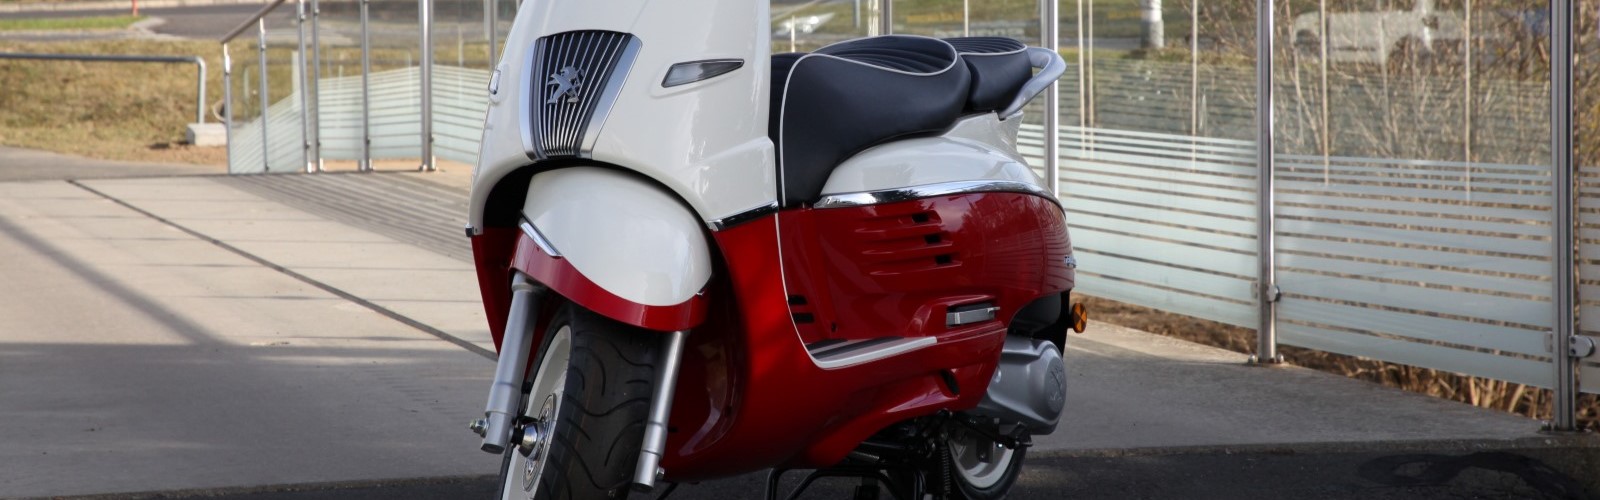 Motivbild der Seite: Peugeot Motocycles